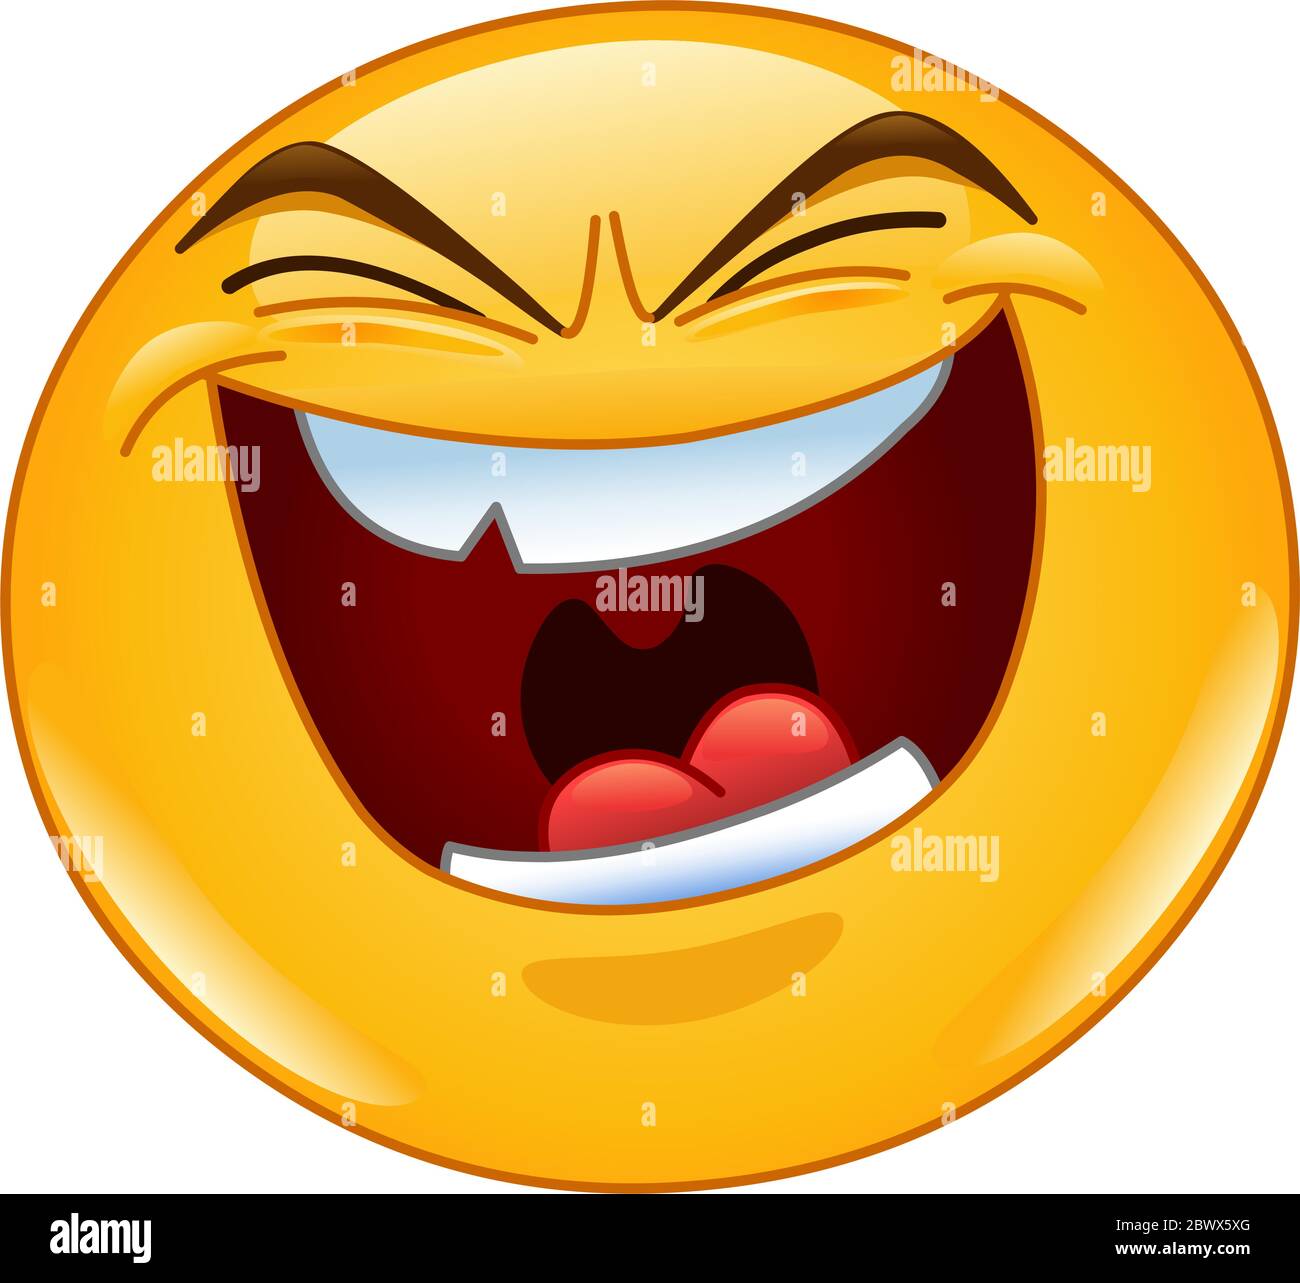 Emoticon with evil laugh Stock Vector